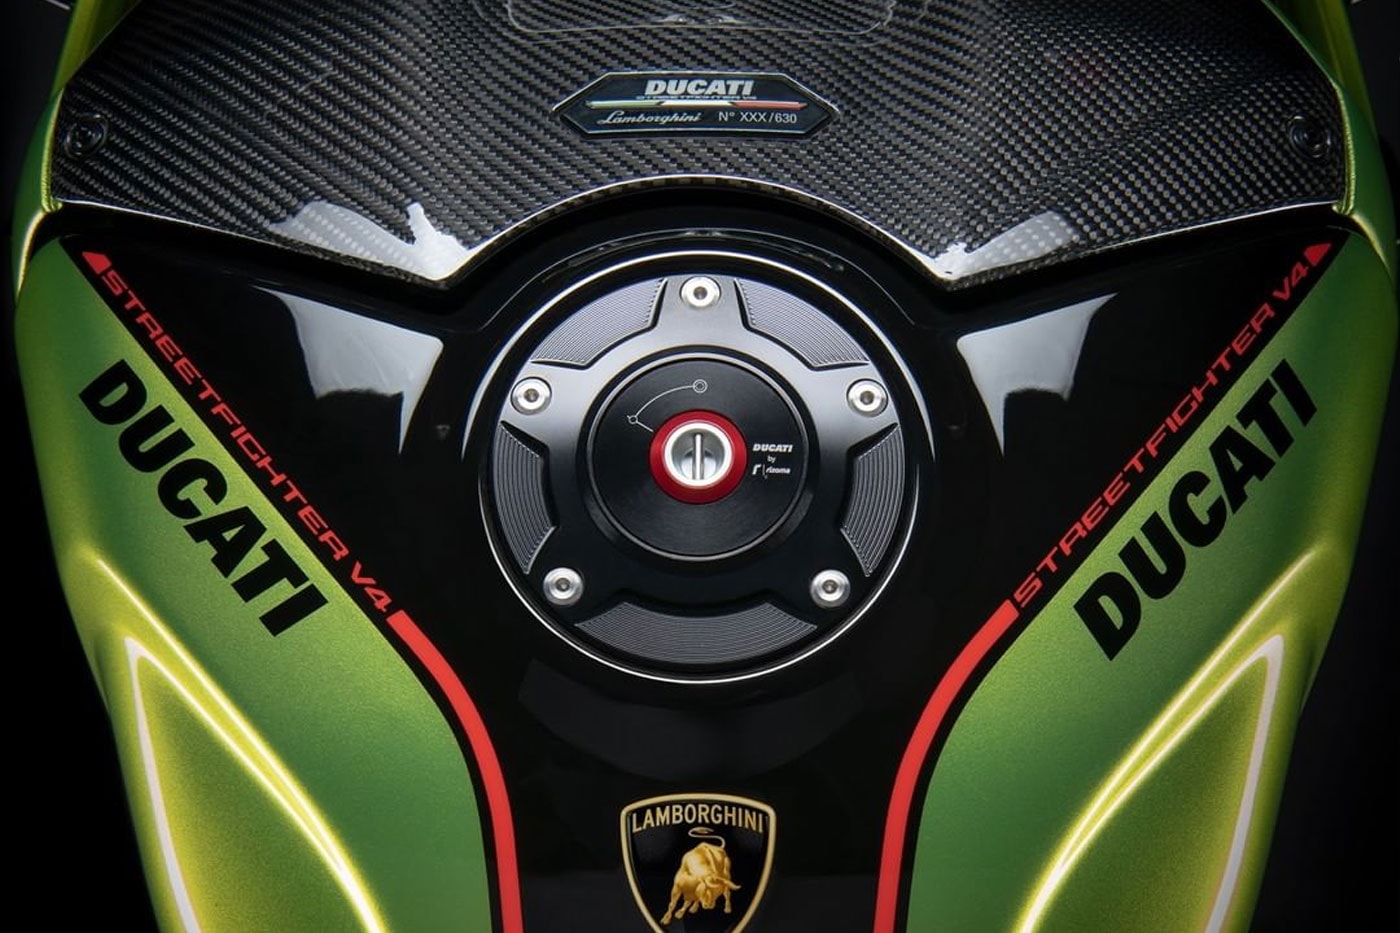 Ducati Lamborghini Street Fighter II V4 huracan sto panigale 23 verde citrea arancio dac limited edition numbered 630 63 release info date price